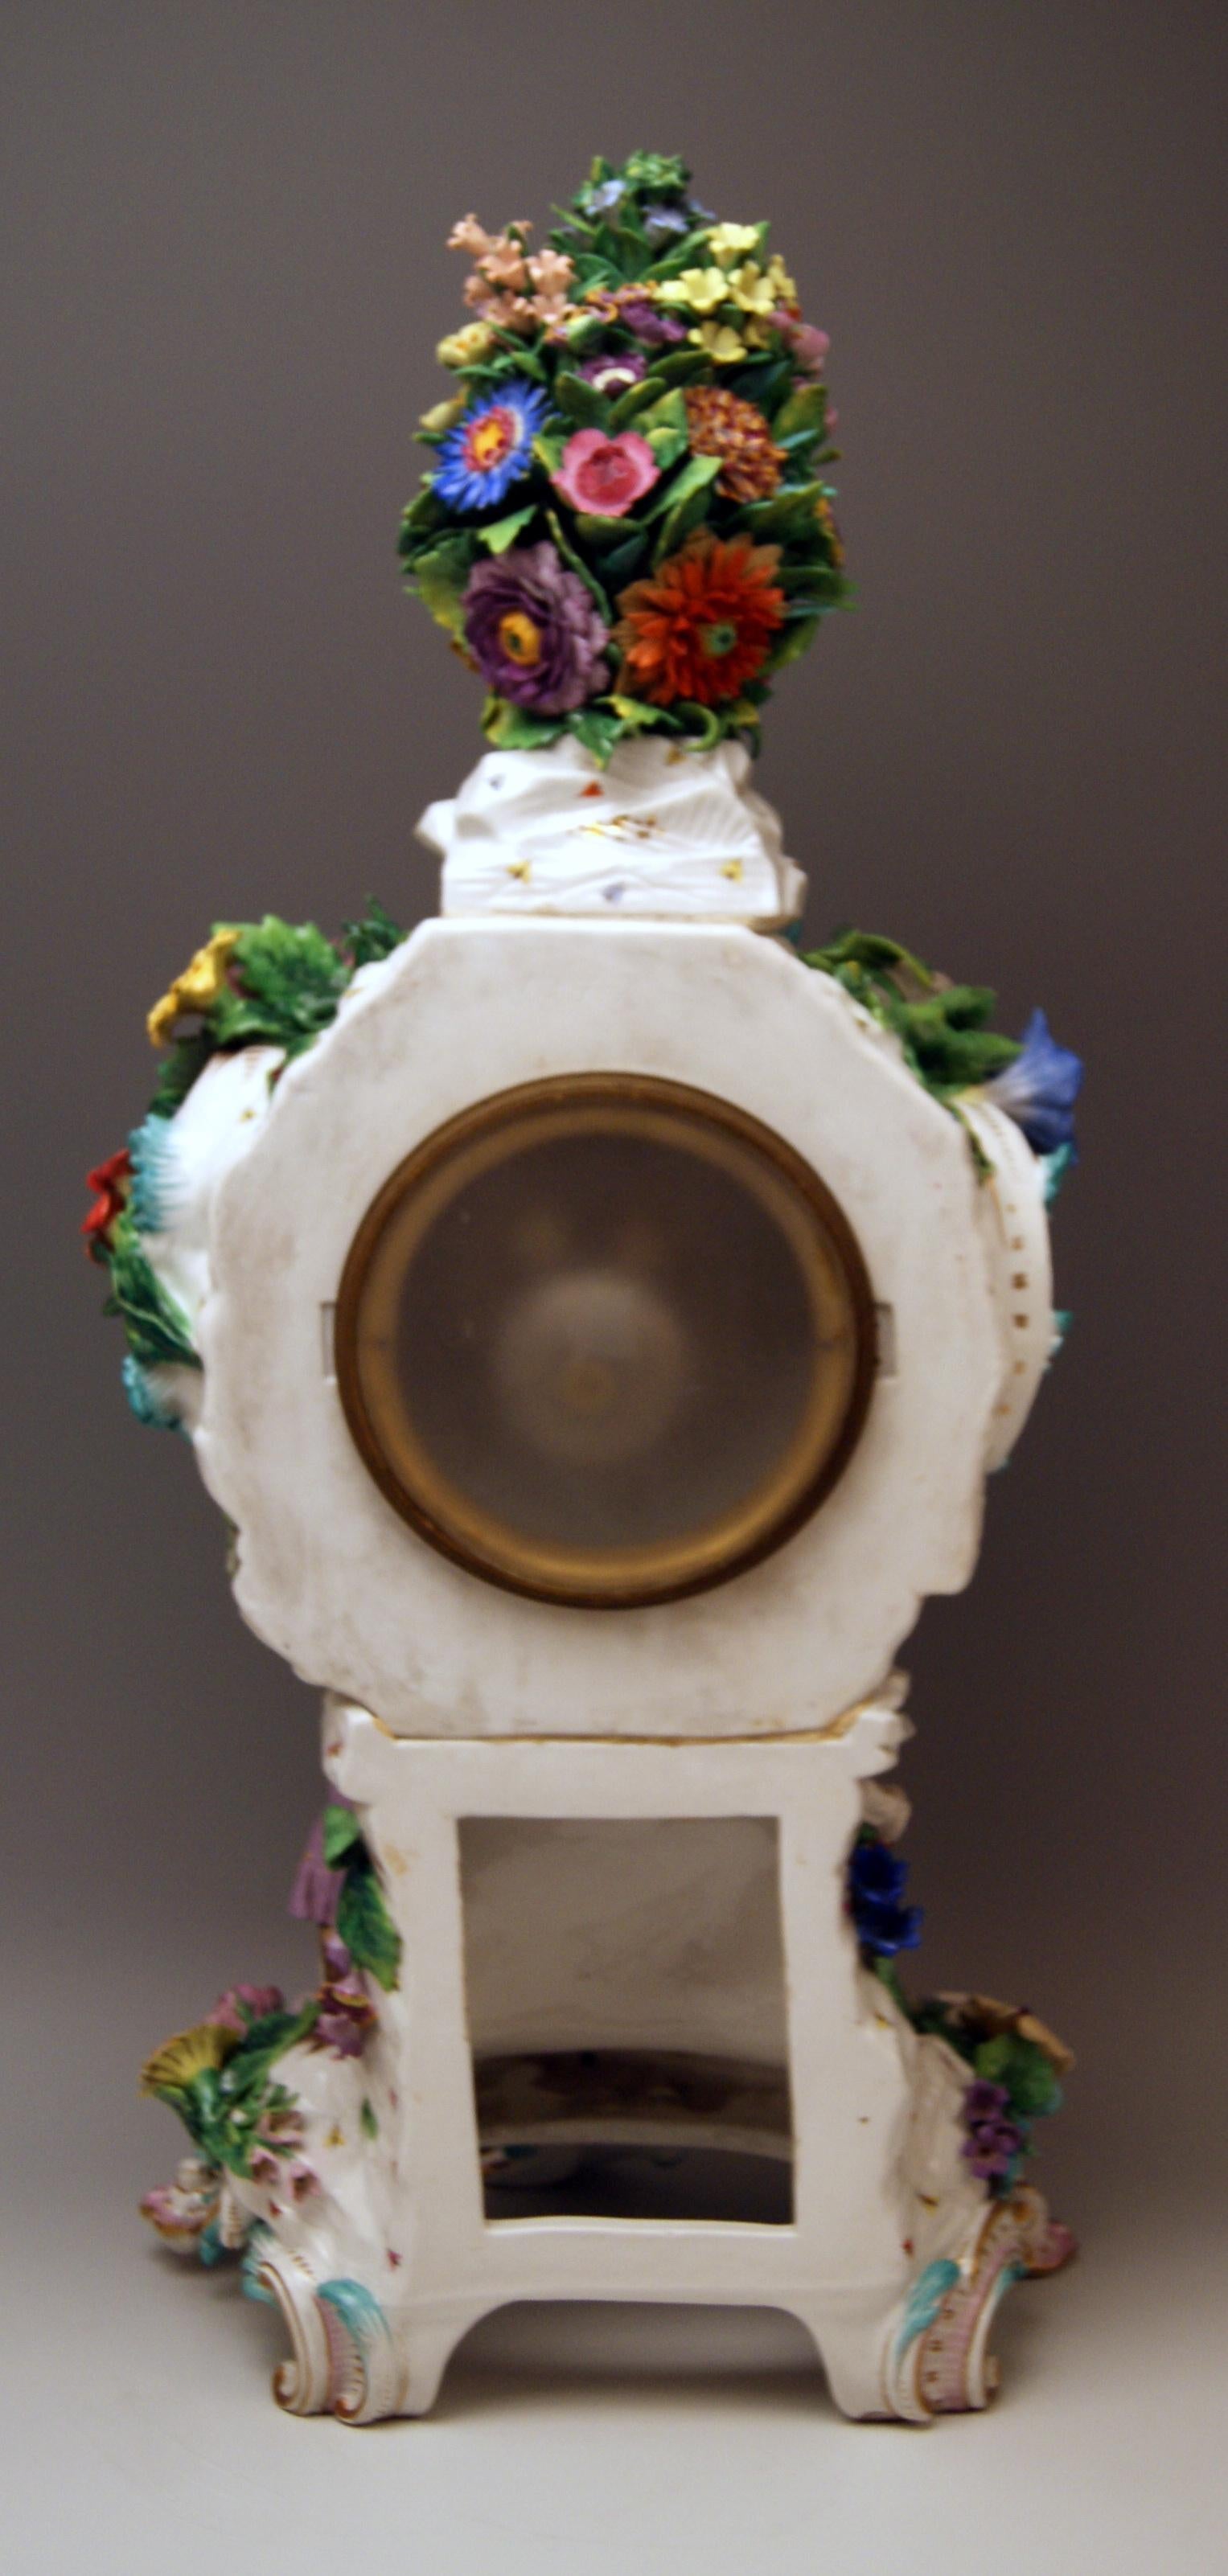 Rococo Revival Meissen Mantel Clock Flowers Figurines Model 1047 Leuteritz Height 25.98 inches 